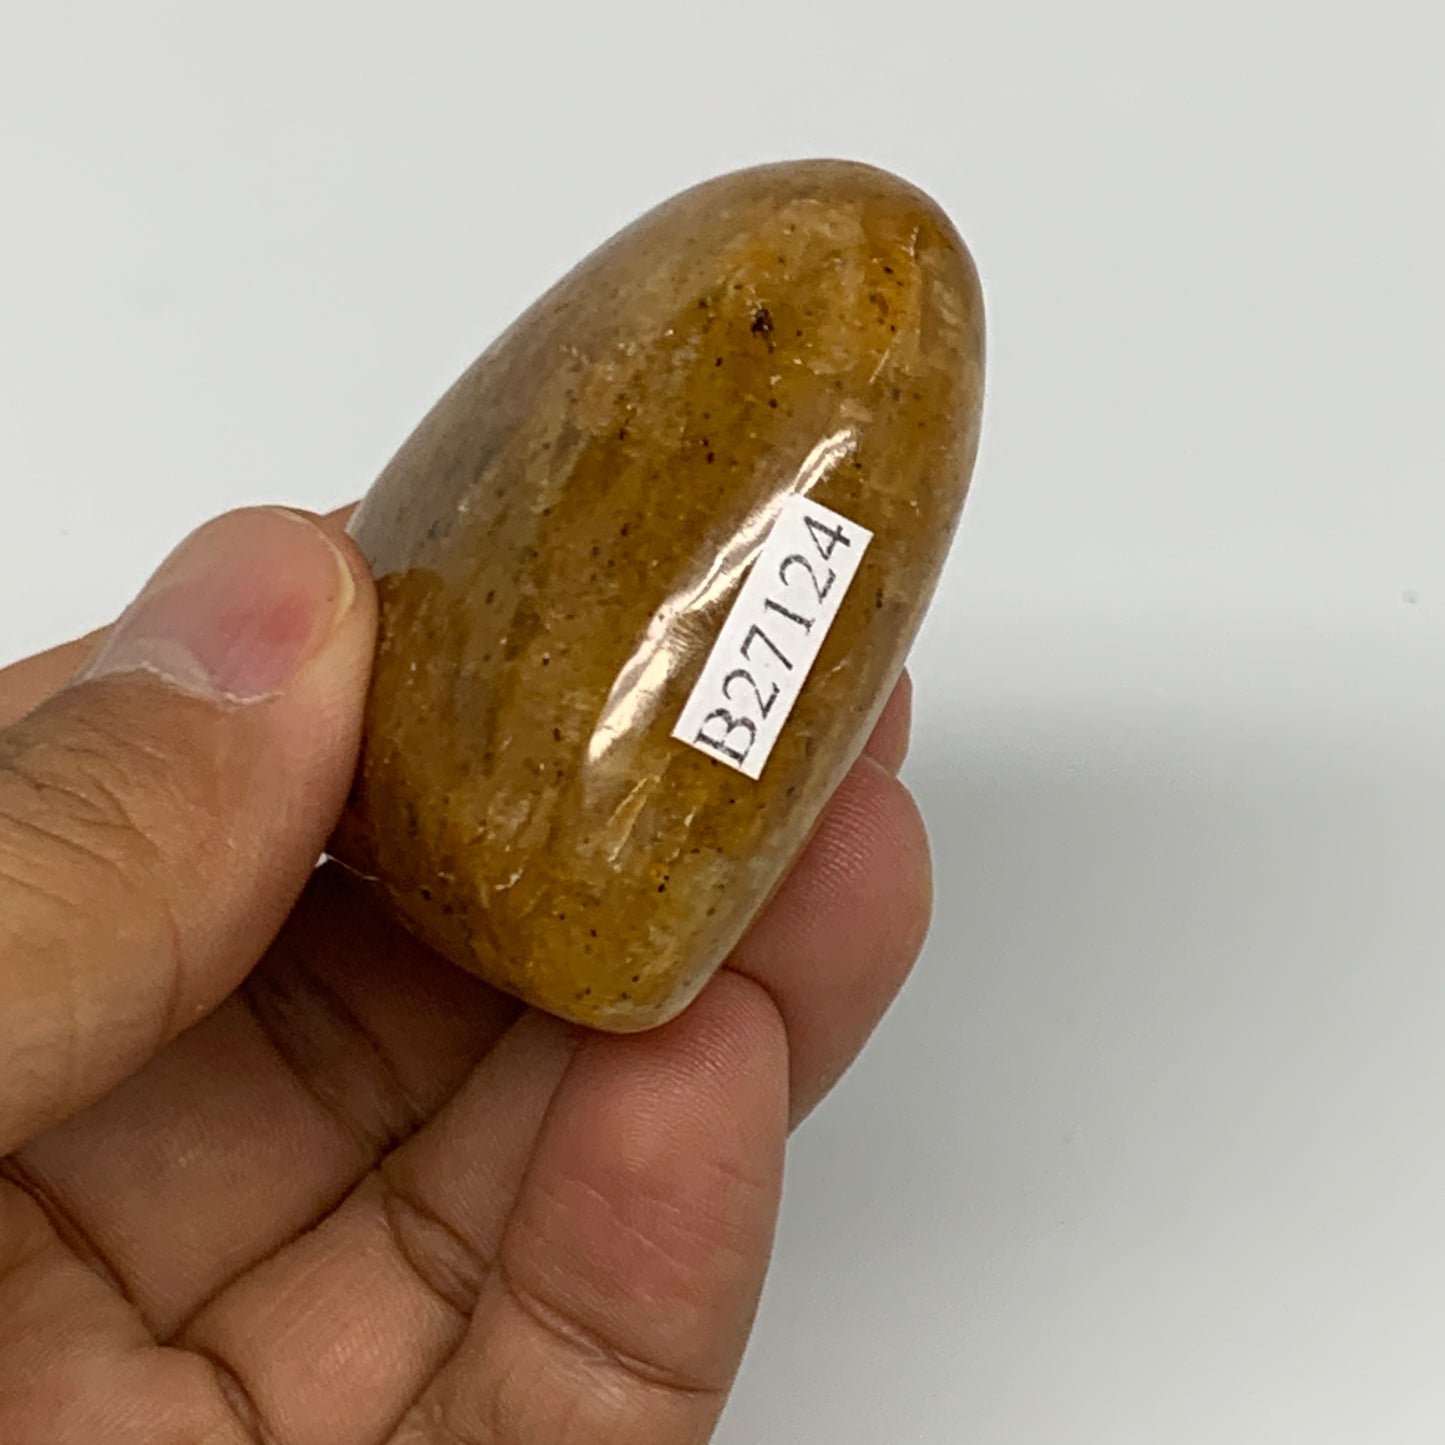 79.7g, 1.9"x2.1"x0.9", Natural Golden Quartz Heart Small Polished Crystal, B2712